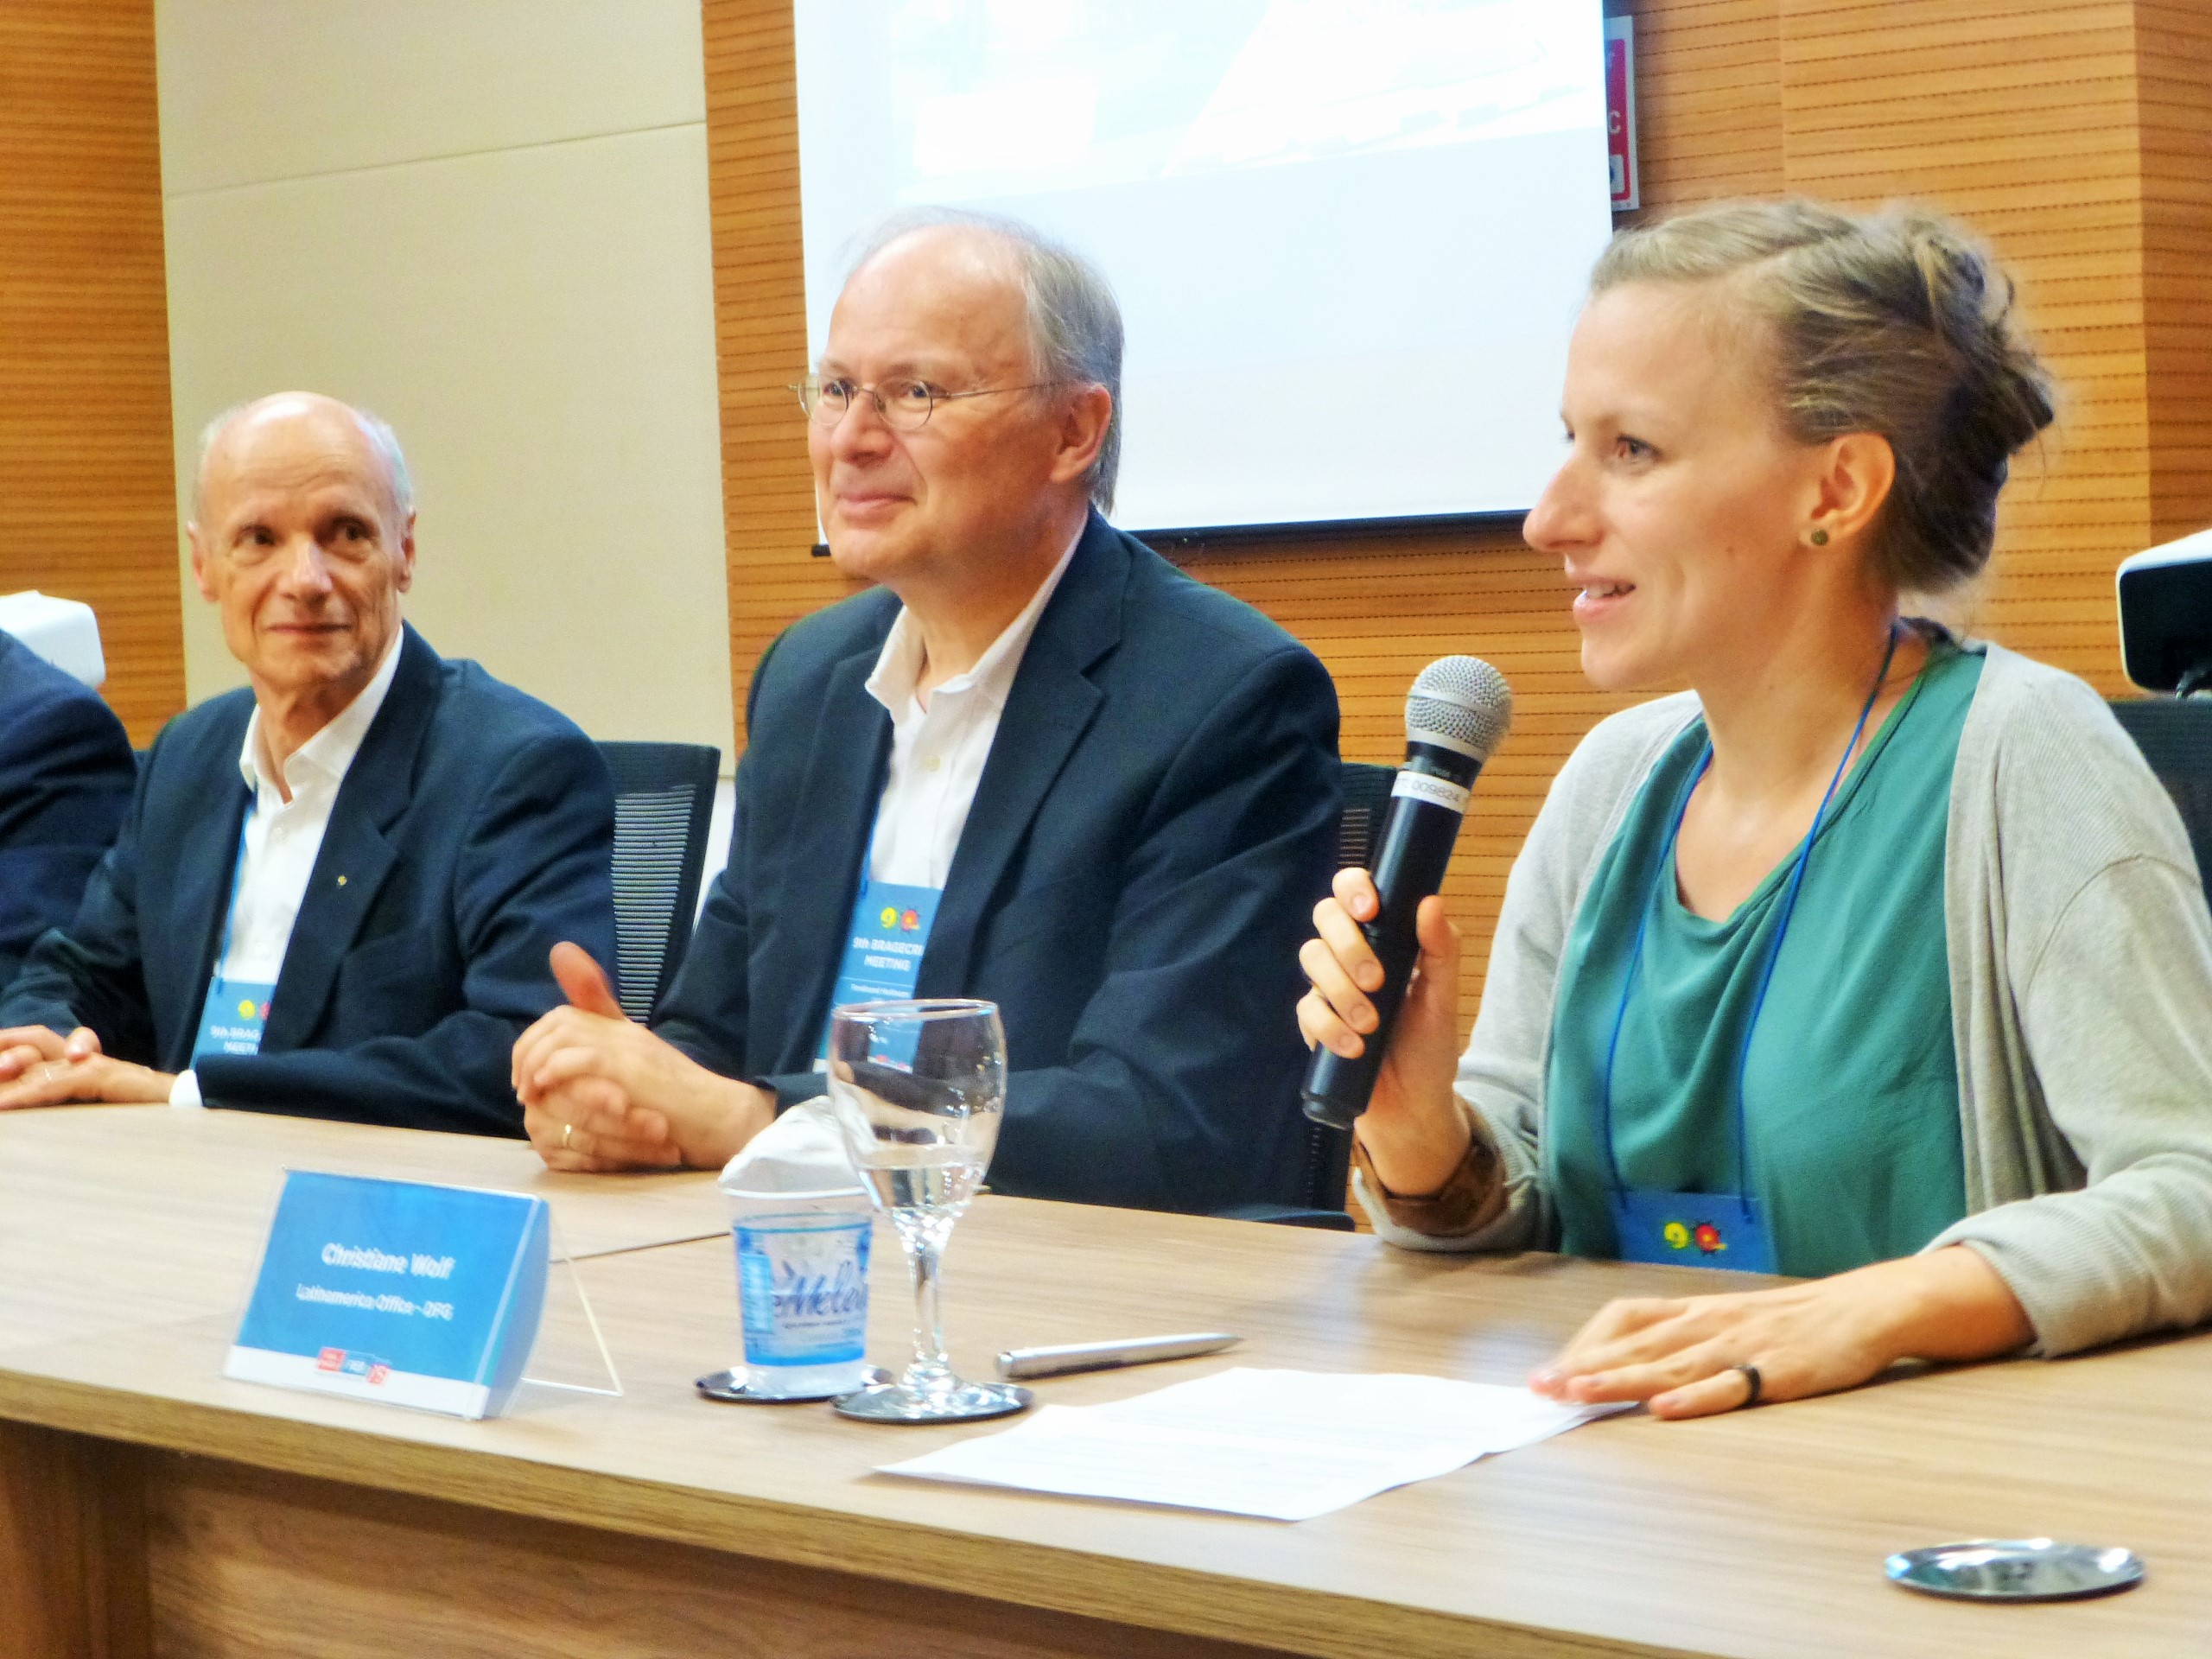 Prof. Dr. Tilo Pfeifer (RWTH Aachen University), Ferdinand Hollmann (DFG Bonn) y Christiane Wolf (Oficina de la DFG para América Latina)